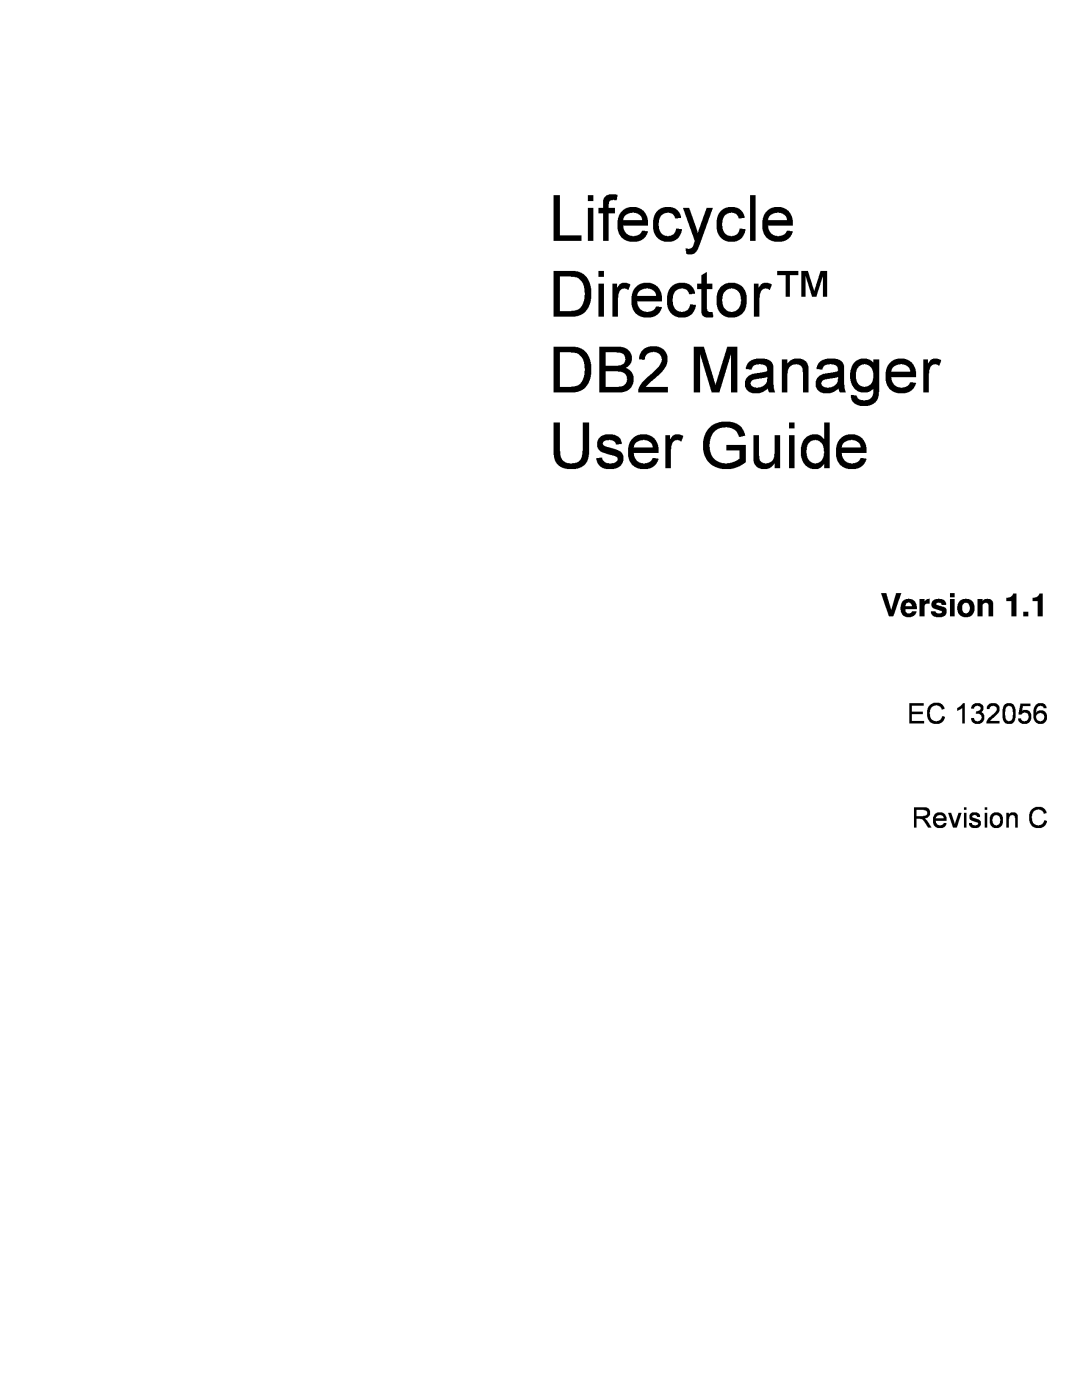 StorageTek 312564001 manual Version, EC Revision C, Lifecycle Director DB2 Manager User Guide 